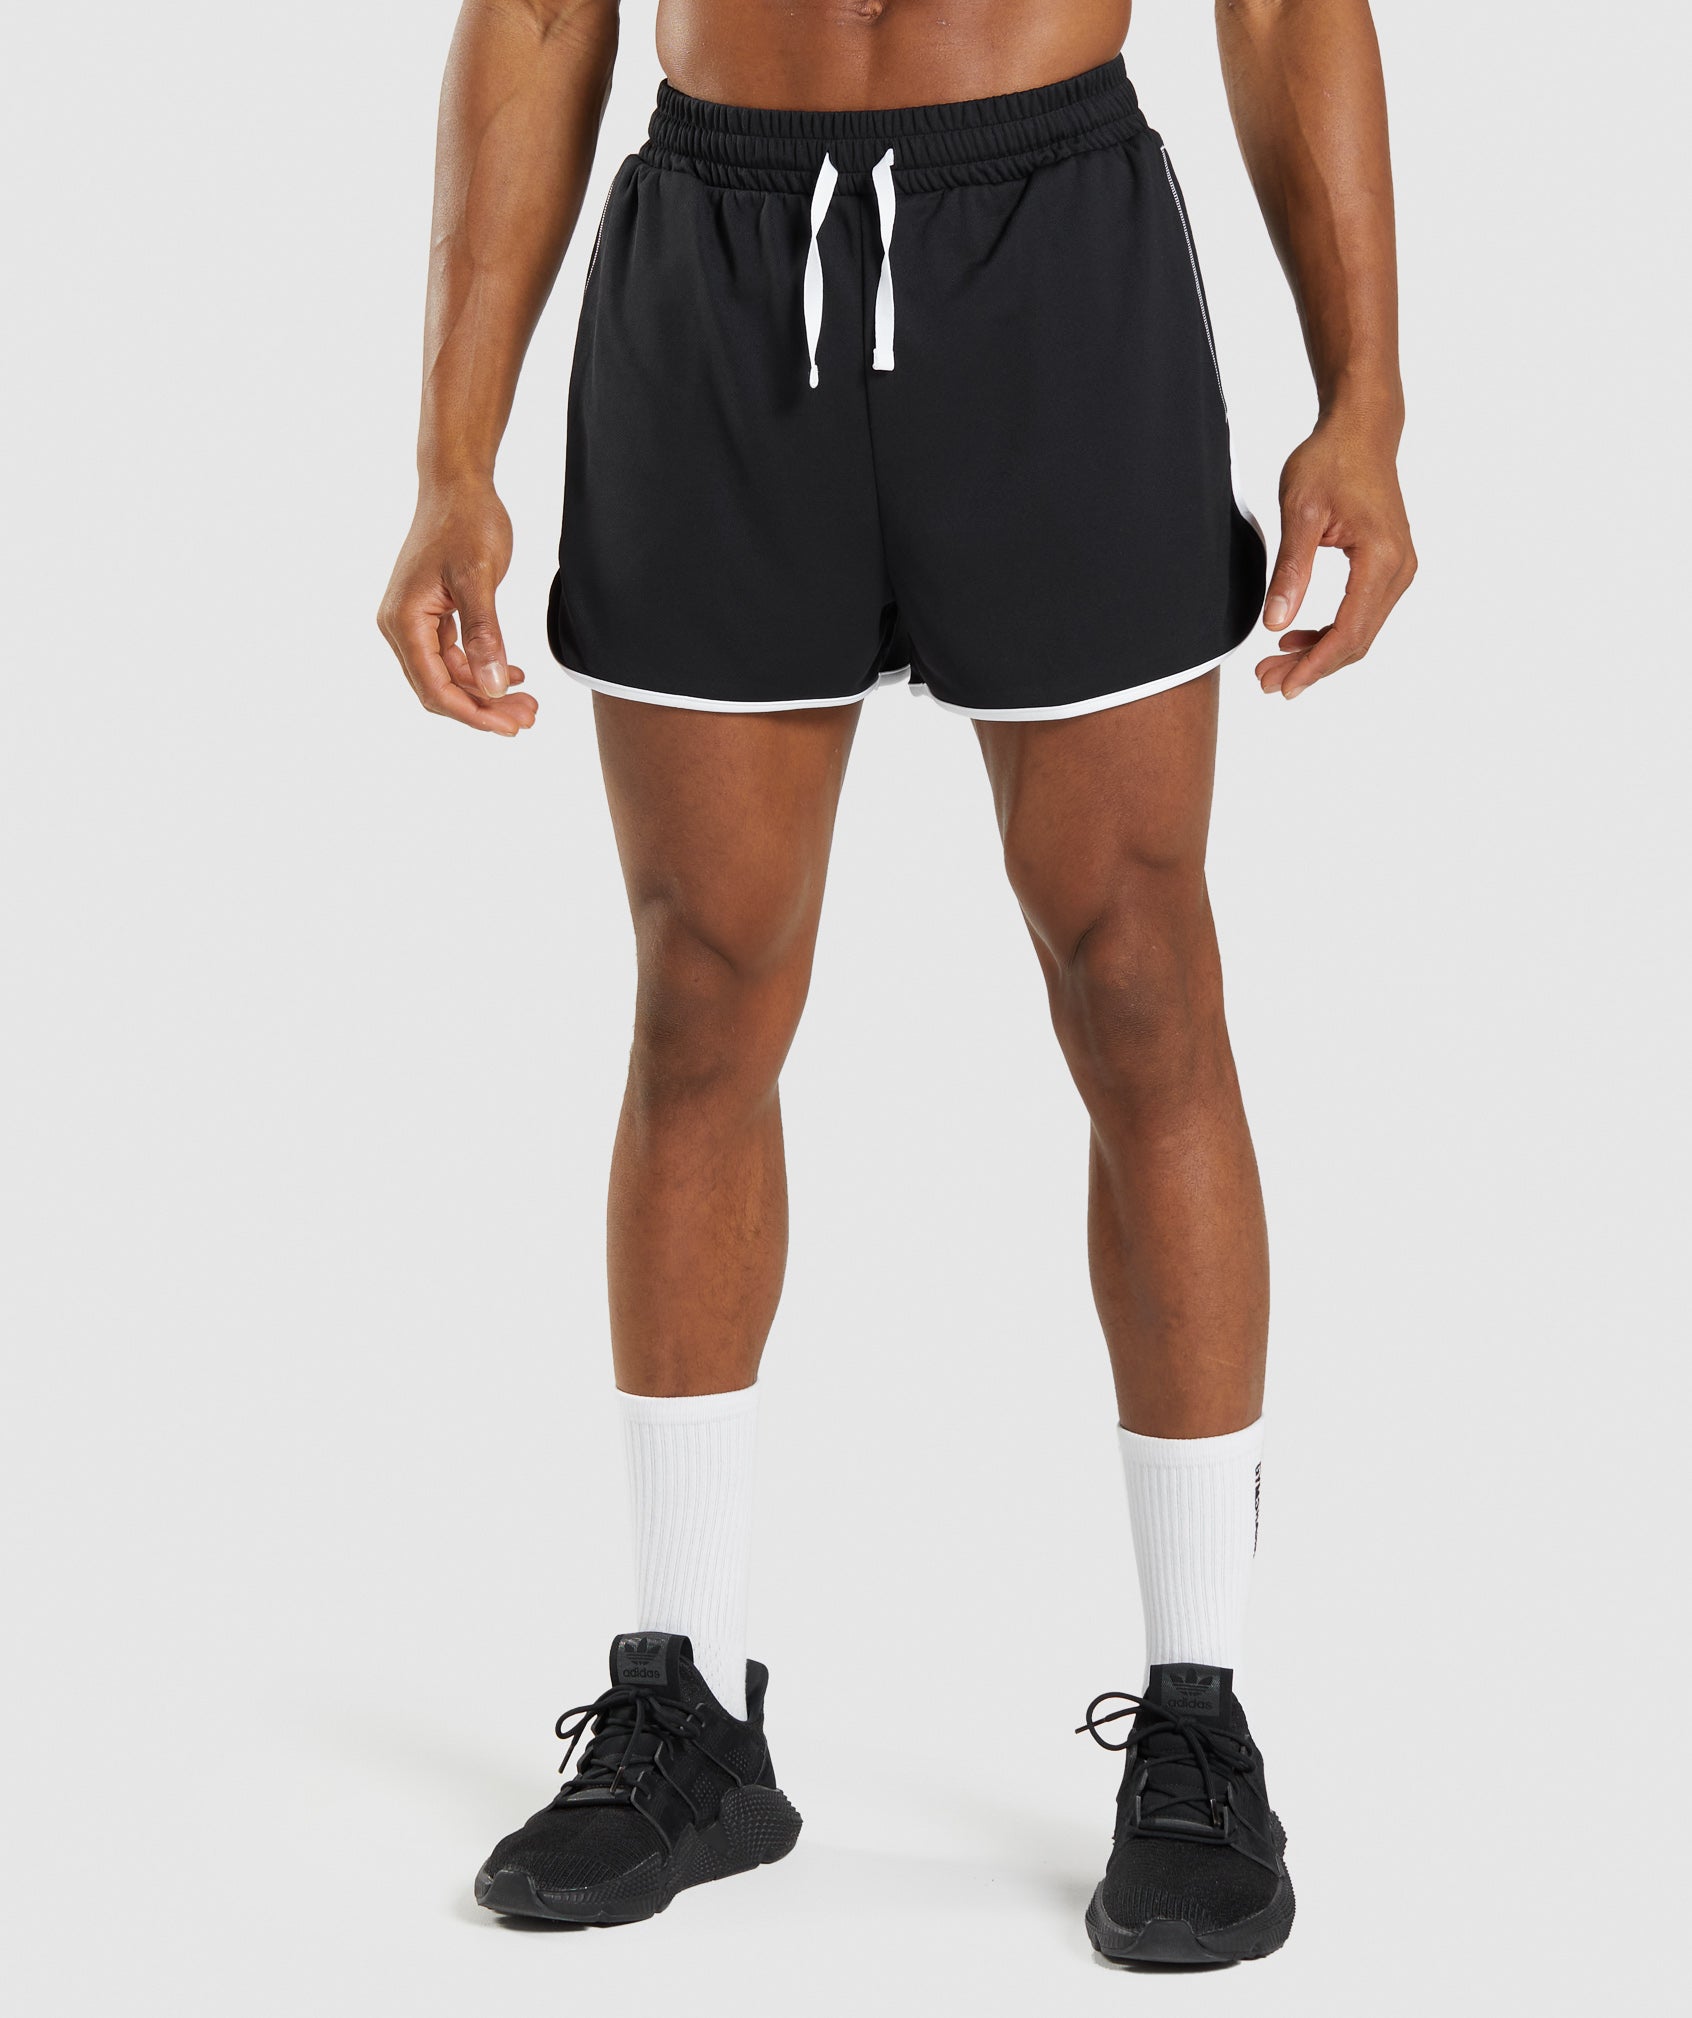 Gymshark Recess 3 Shorts - Black/White